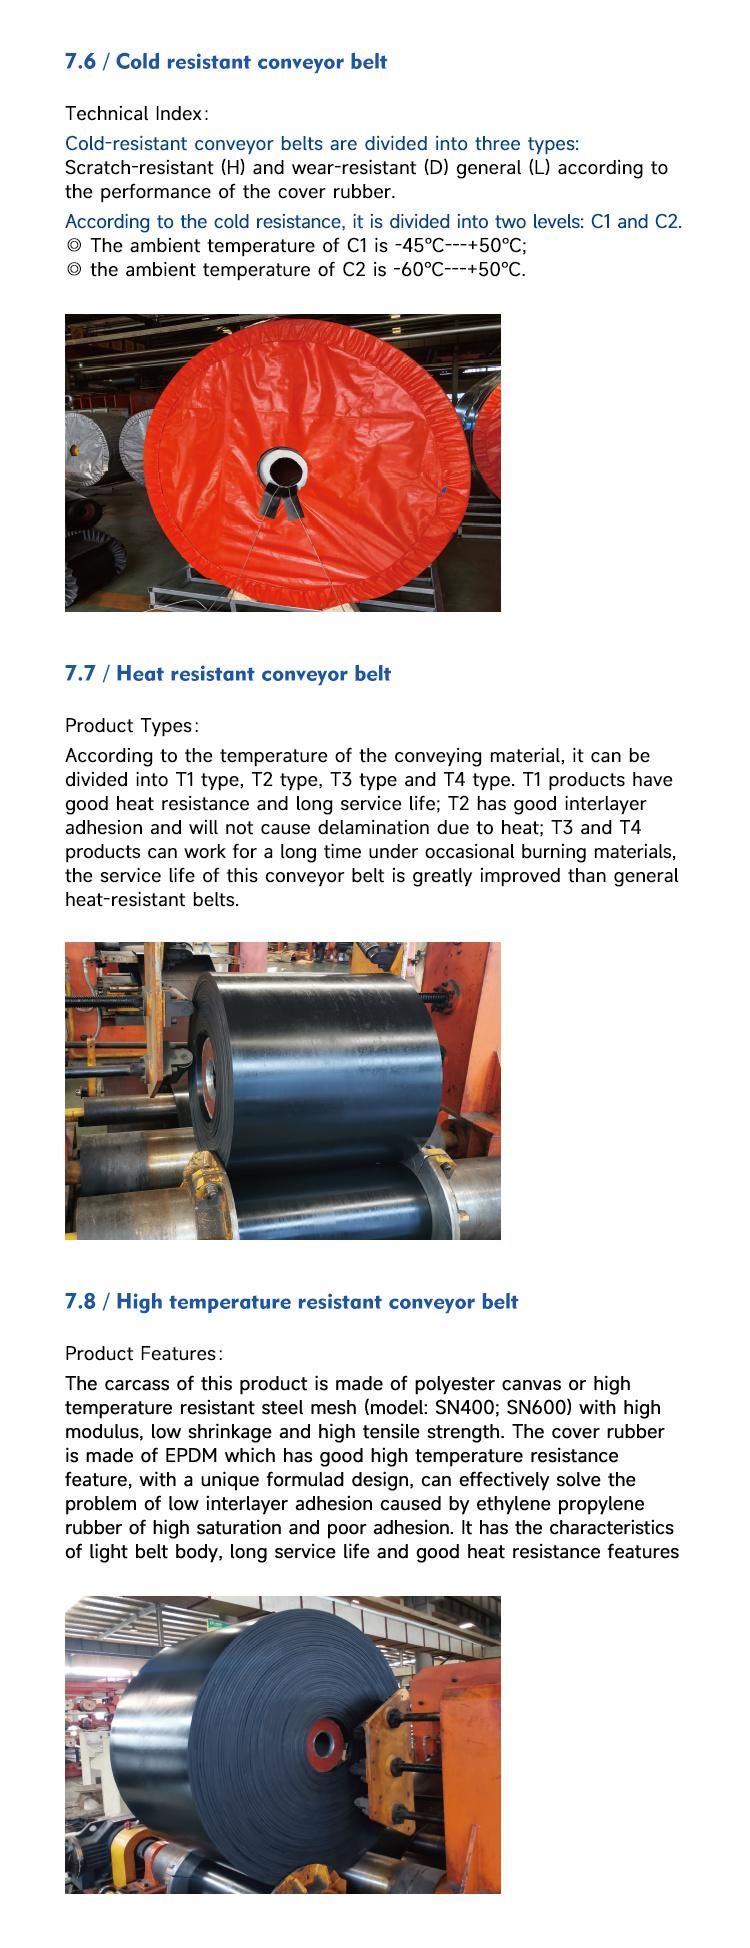 Customized Lower Conveyor System Take-up Travel Anti-Tearing Steel Cord Belt